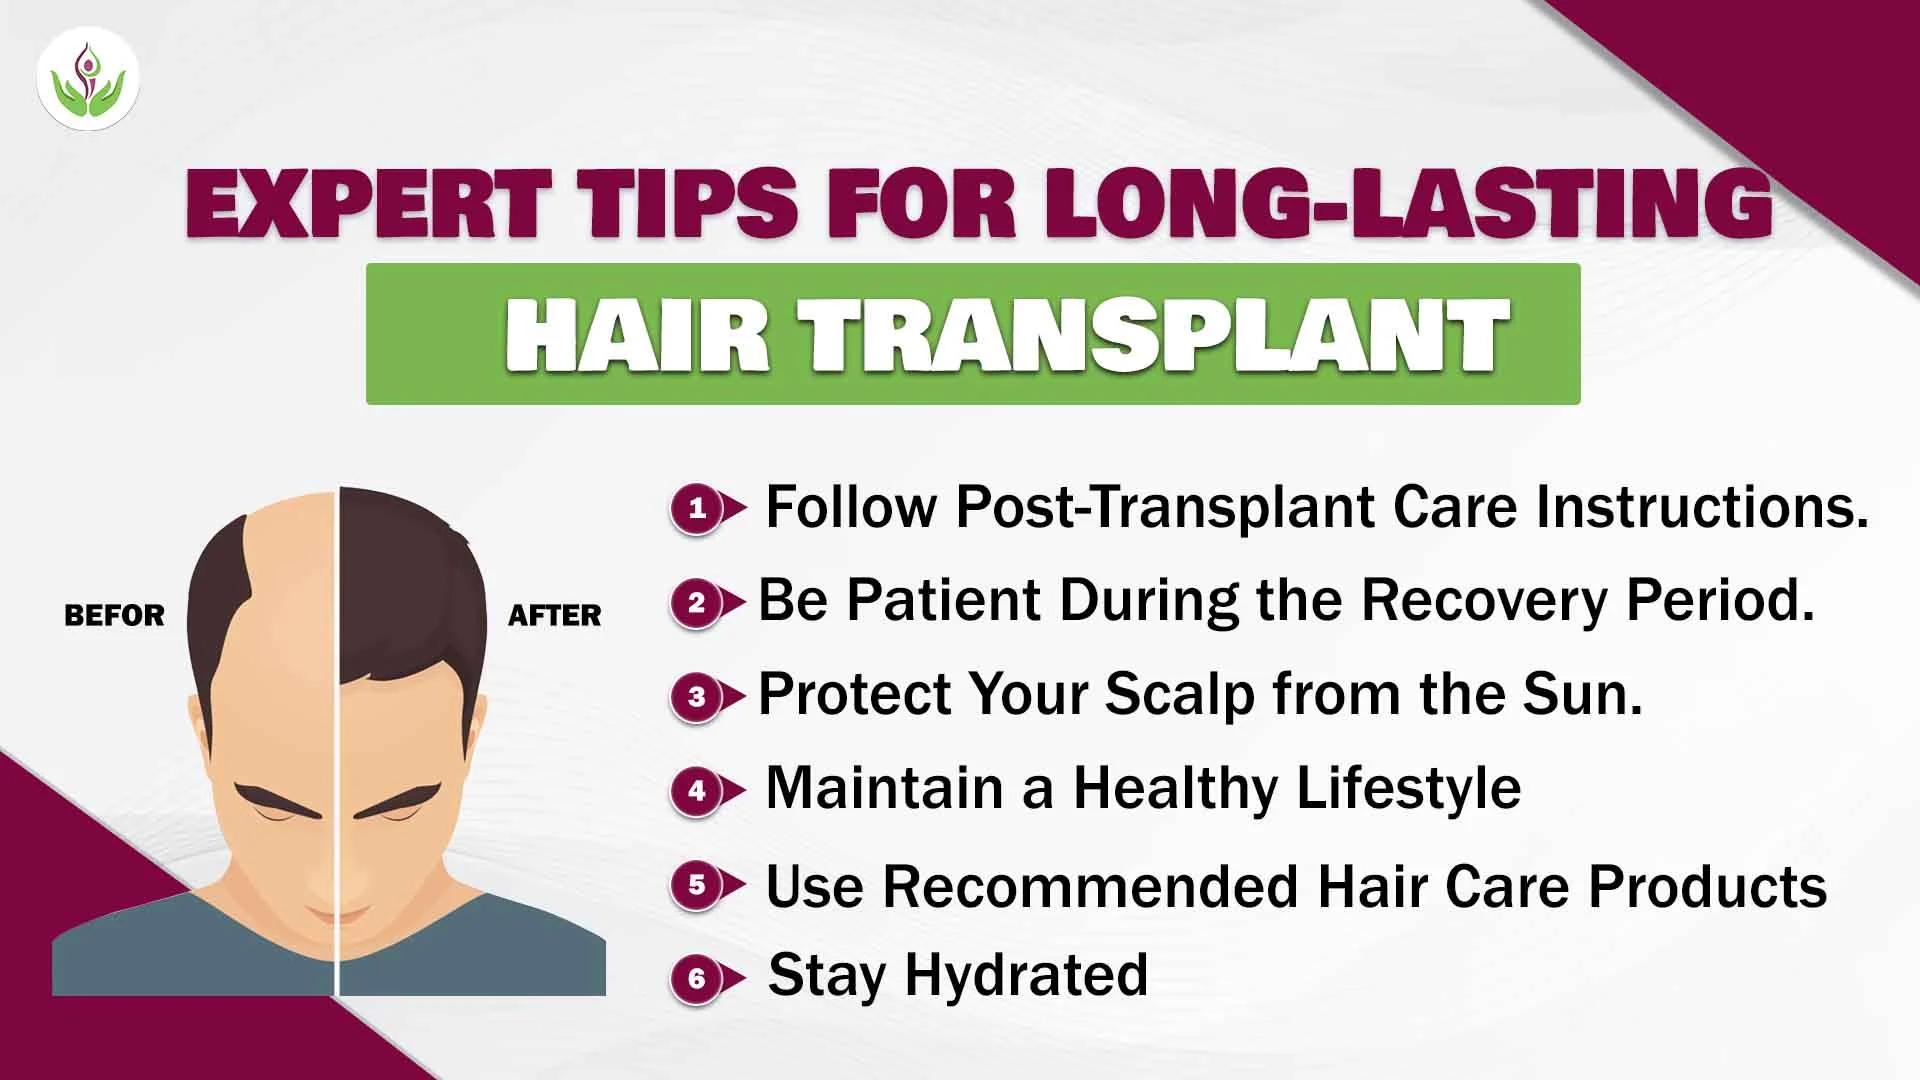  Tips for Long-Lasting Hair Transplant